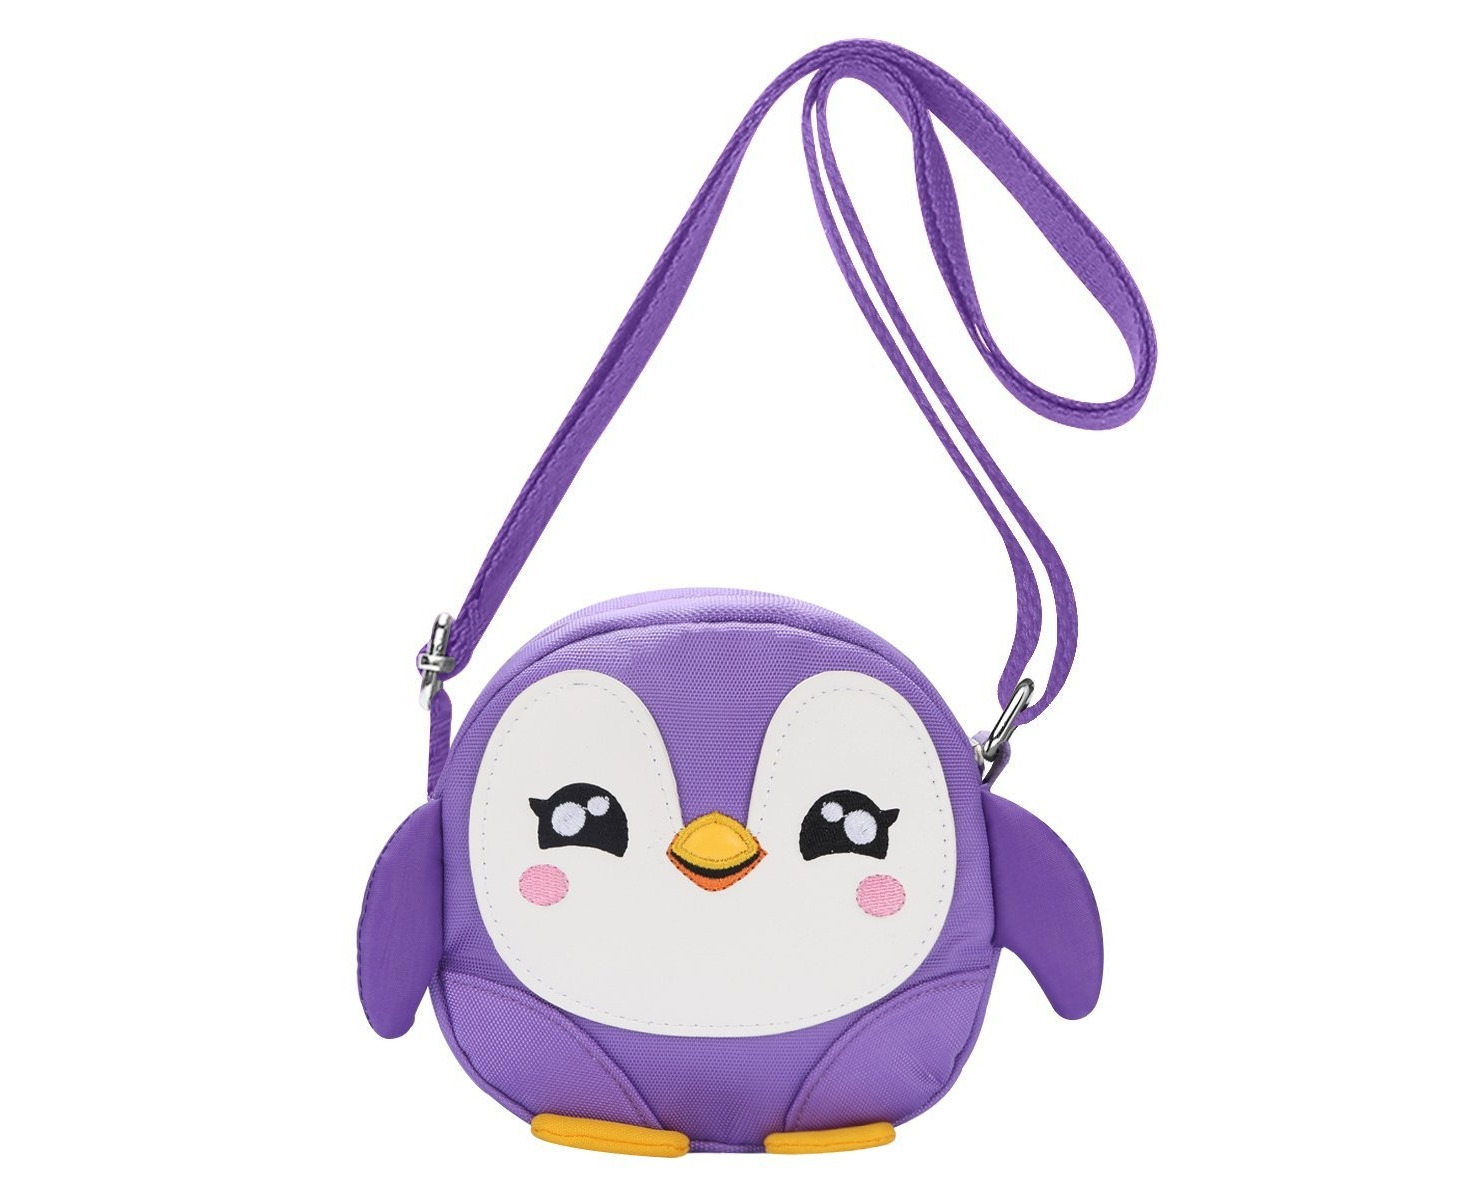 Kids Shoulder Bag Crossbody Purse Mini Cartoon Animal Preschool Messenger Handbag for Children Toddler Baby Girls DEEKEY Rabbit Purple 